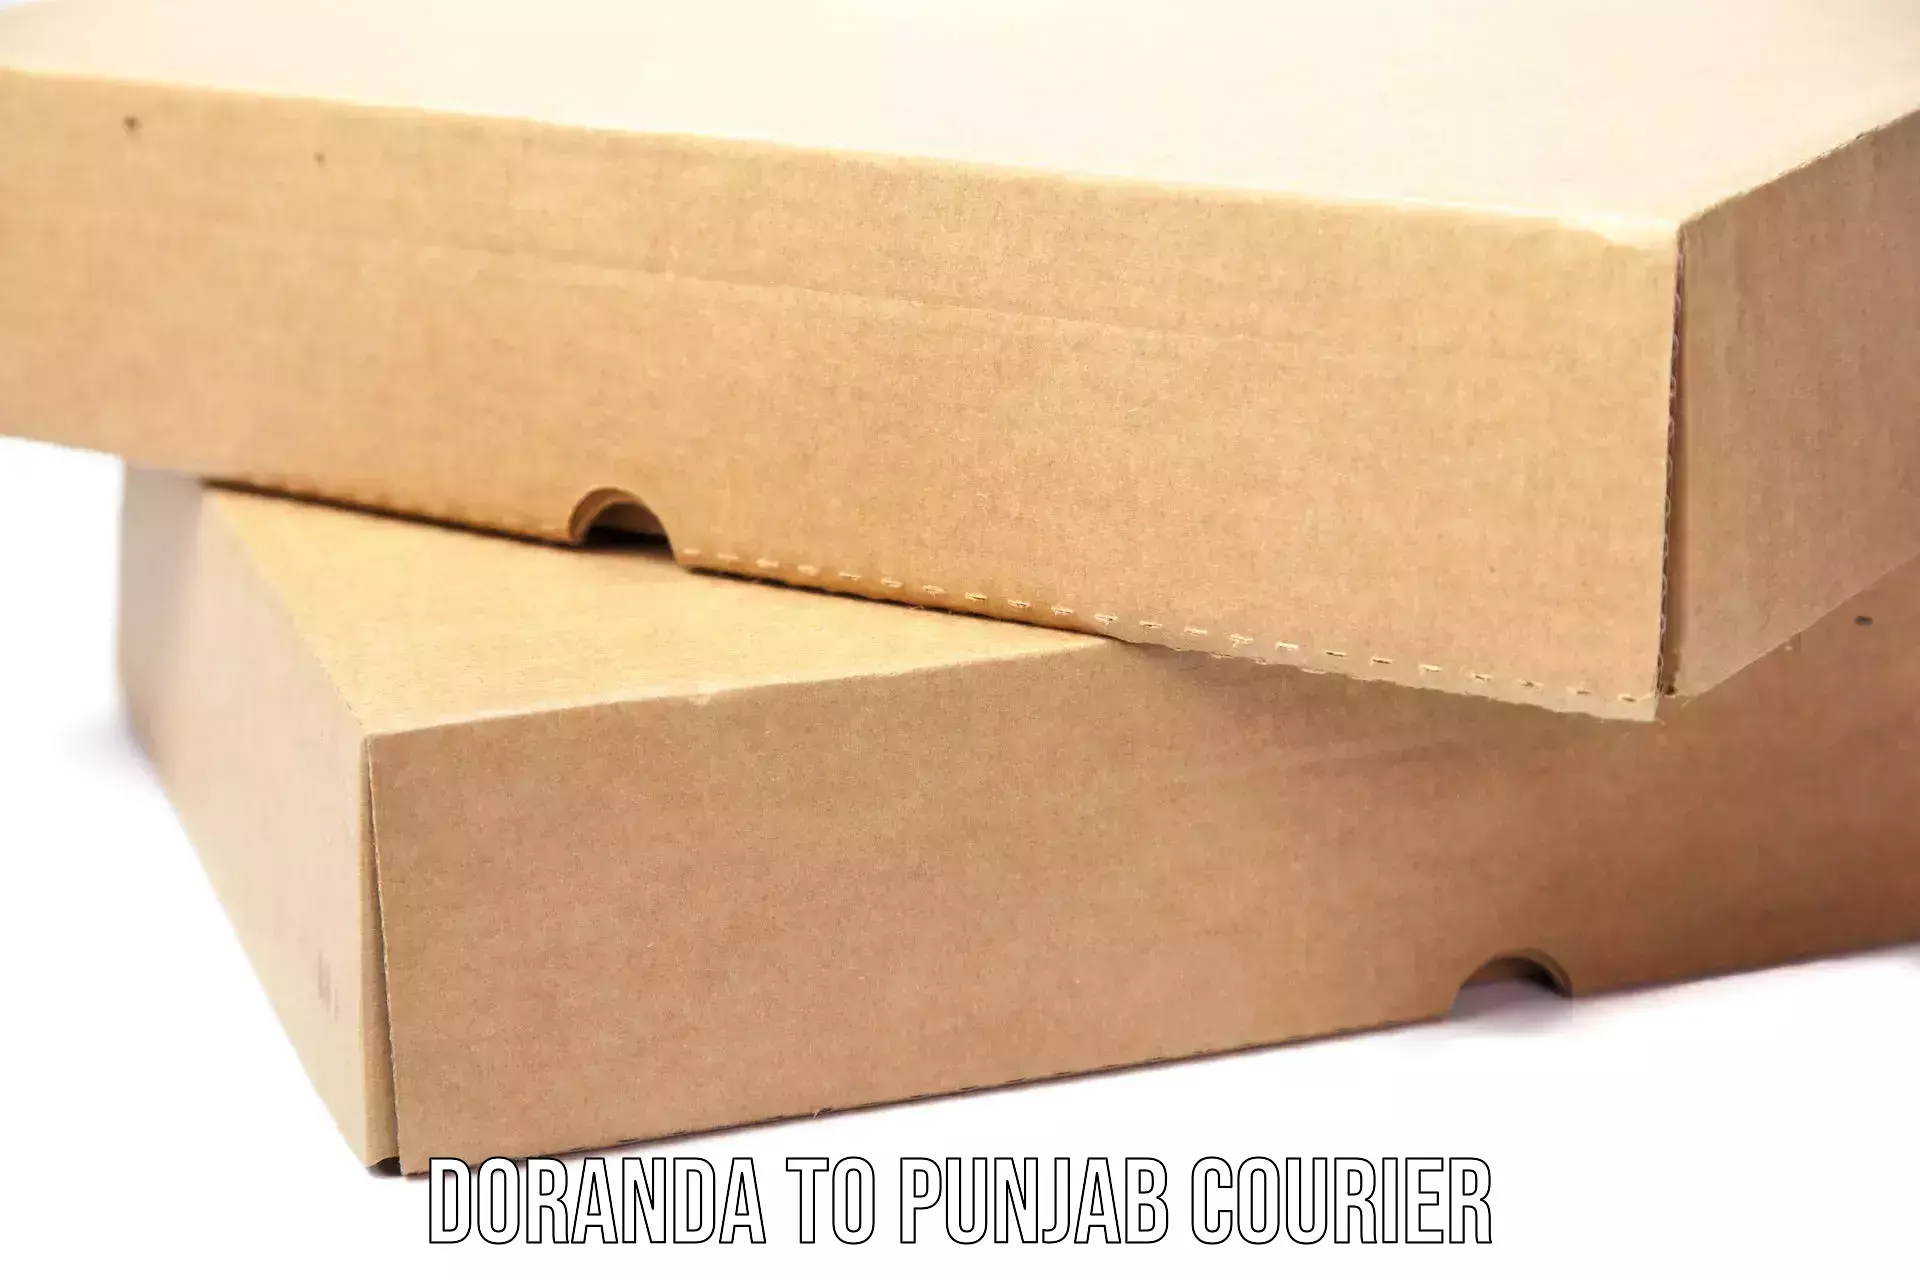 On-demand shipping options Doranda to Punjab